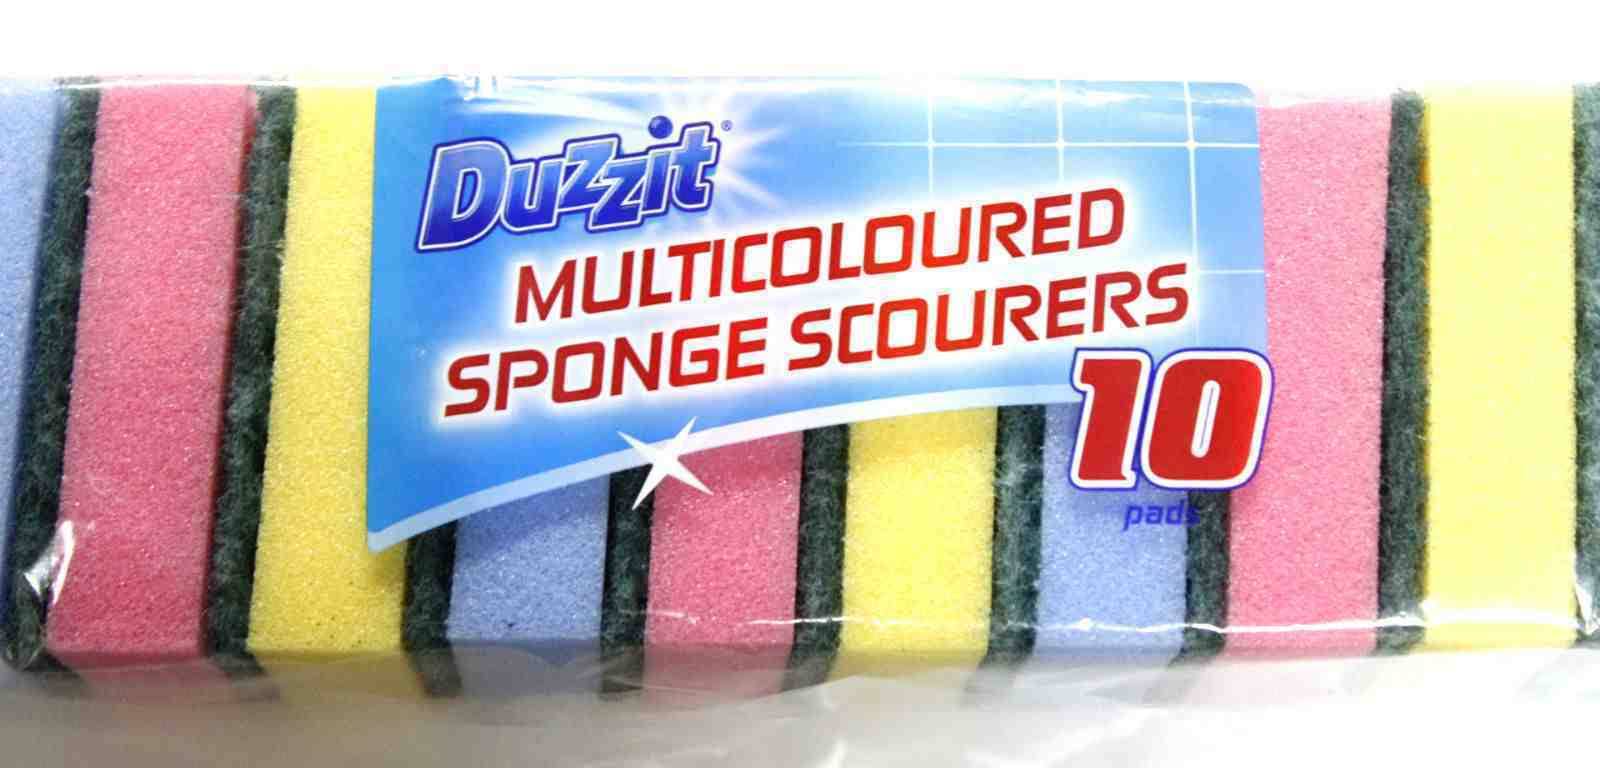 Duzzit Multicoloured Sponge Scourers